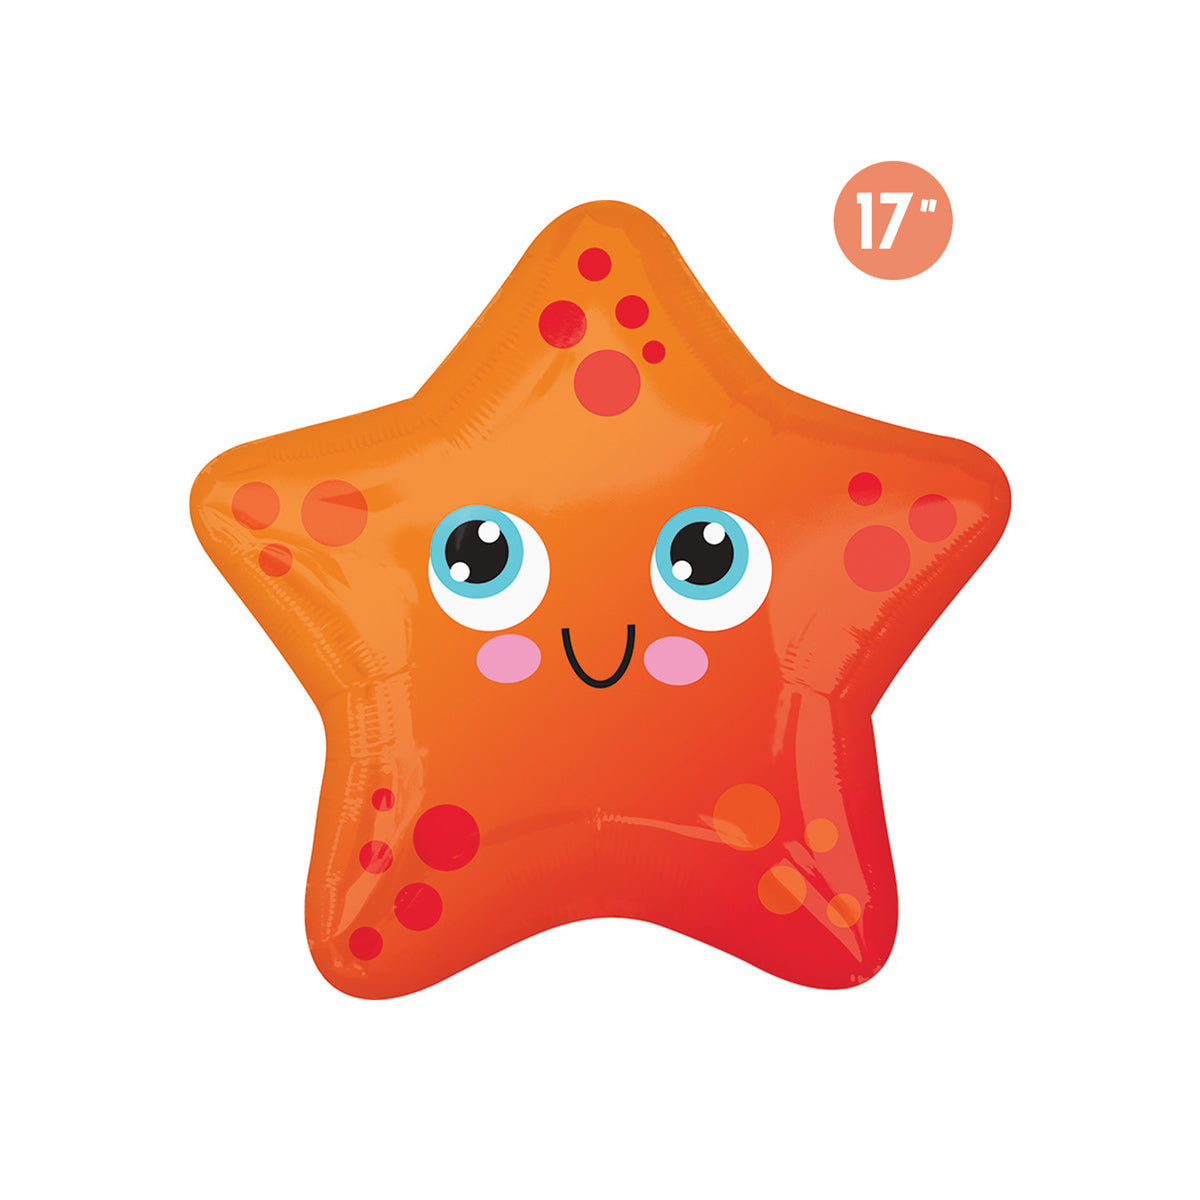 Cute Starfish Foil Balloon 17-inch - Sea Animal, Ocean, Mermaid Under the Sea Birthday Party Decorations